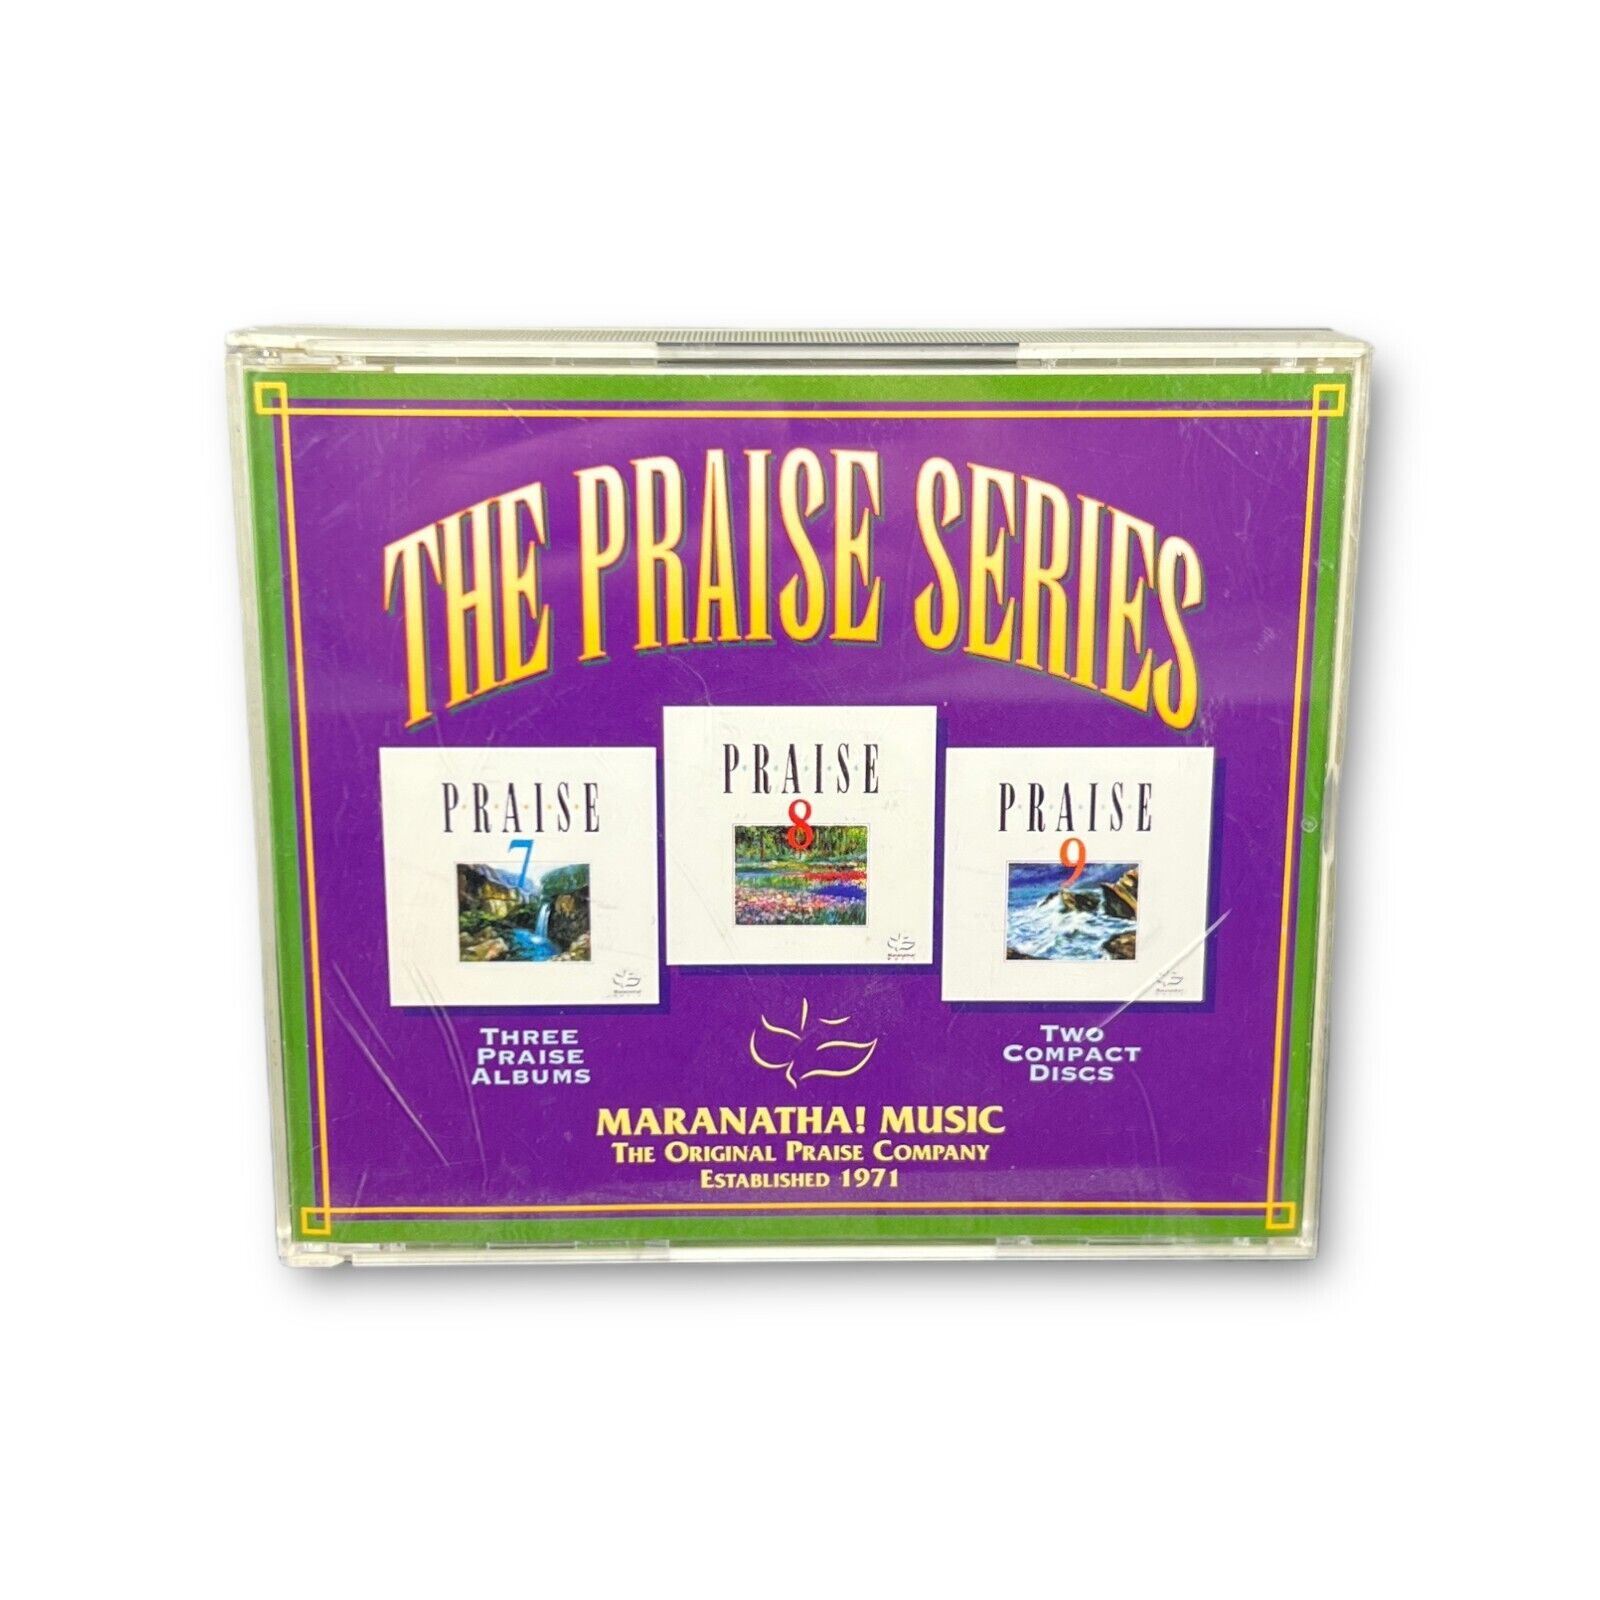 PRAISE SERIES - Praise 7-9 Gift Pack - CD - **Excellent Condition** - RARE